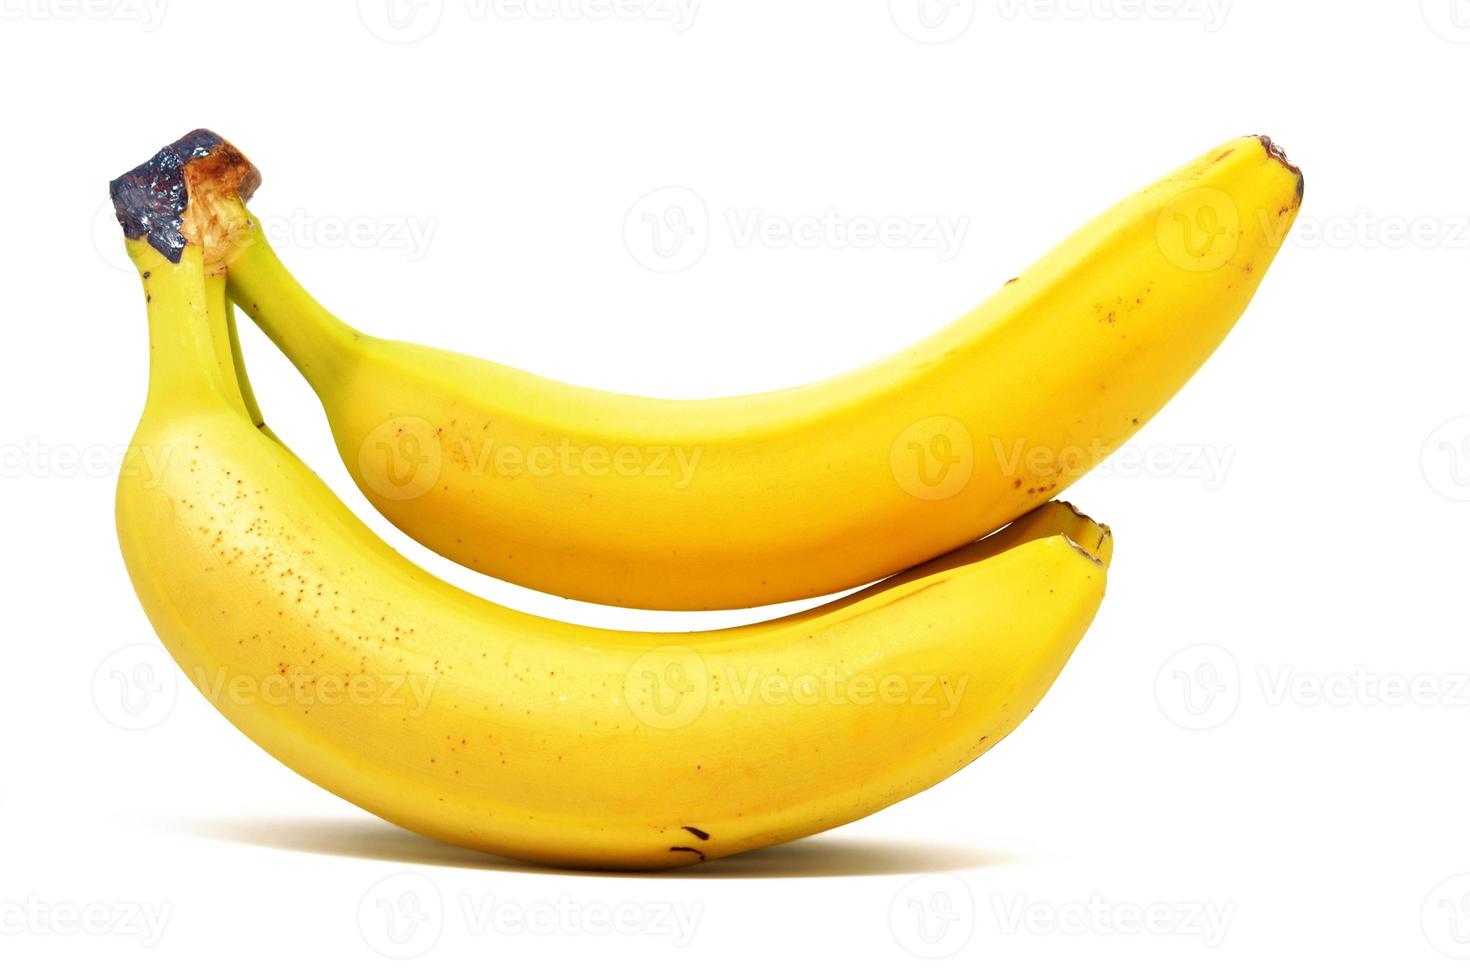 två gula bananer på en vit bakgrund foto